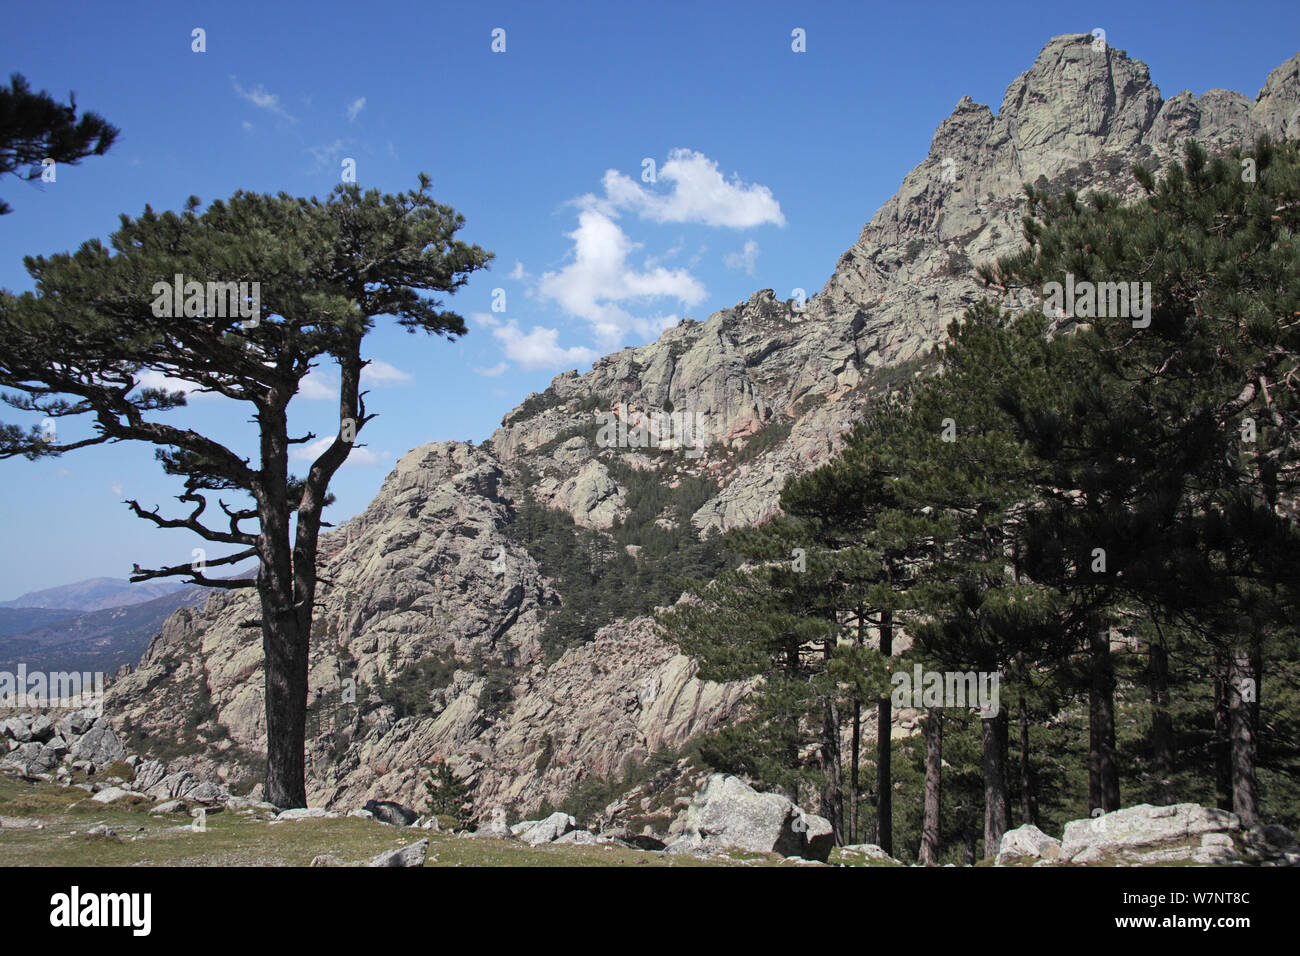 Ancient Corsican pine trees (Pinus nigra laricio), with the Col de Bavella in the background, Parc Naturel Regional de Corse, Corsica, France, April 2010. Stock Photo